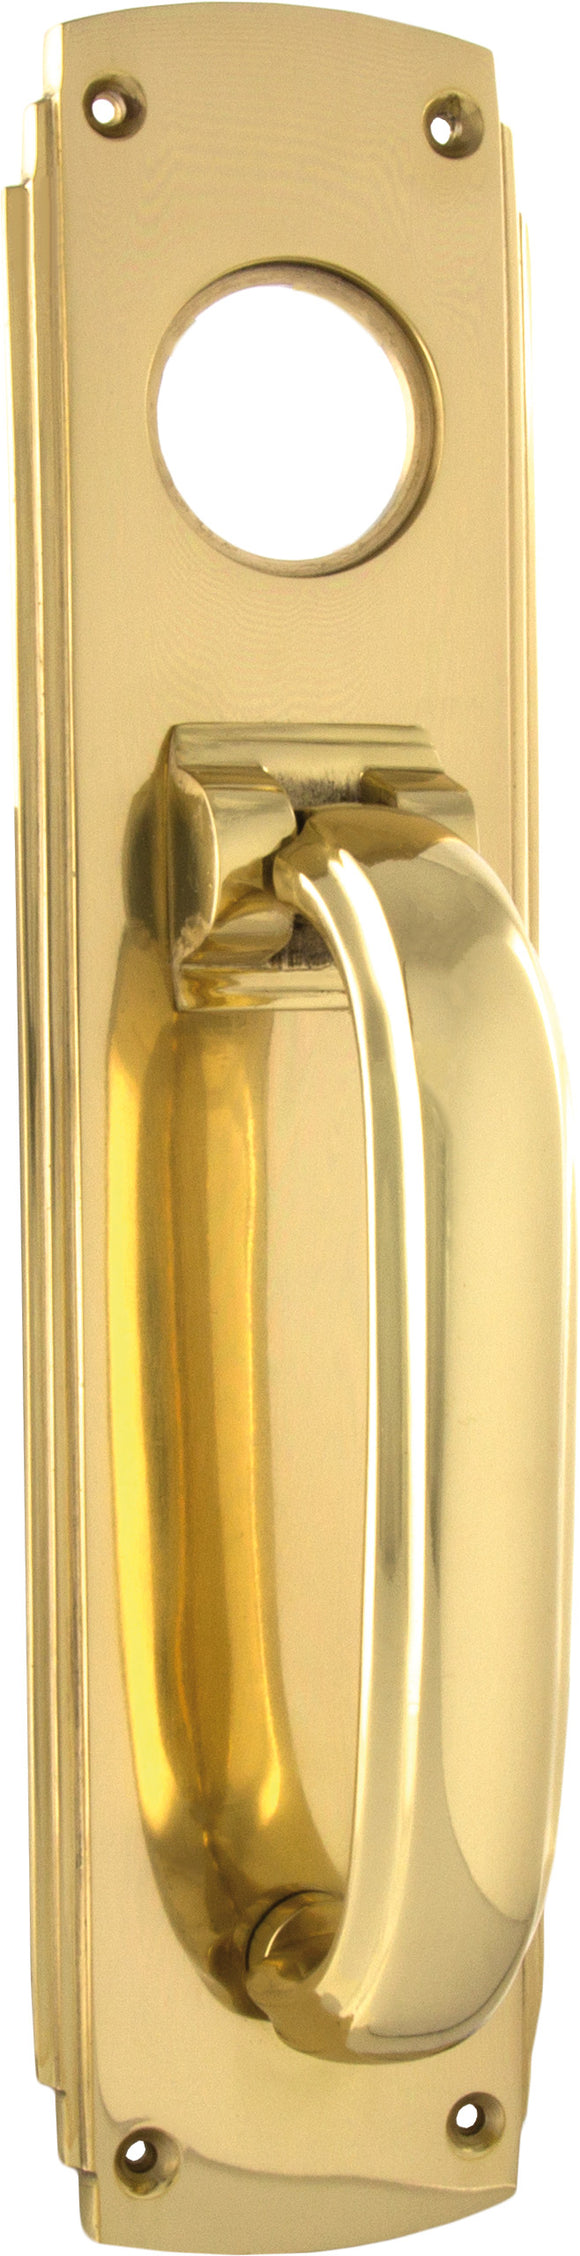 Pull Handle Knocker Art Deco Cylinder Hole Polished Brass H240xW60mm